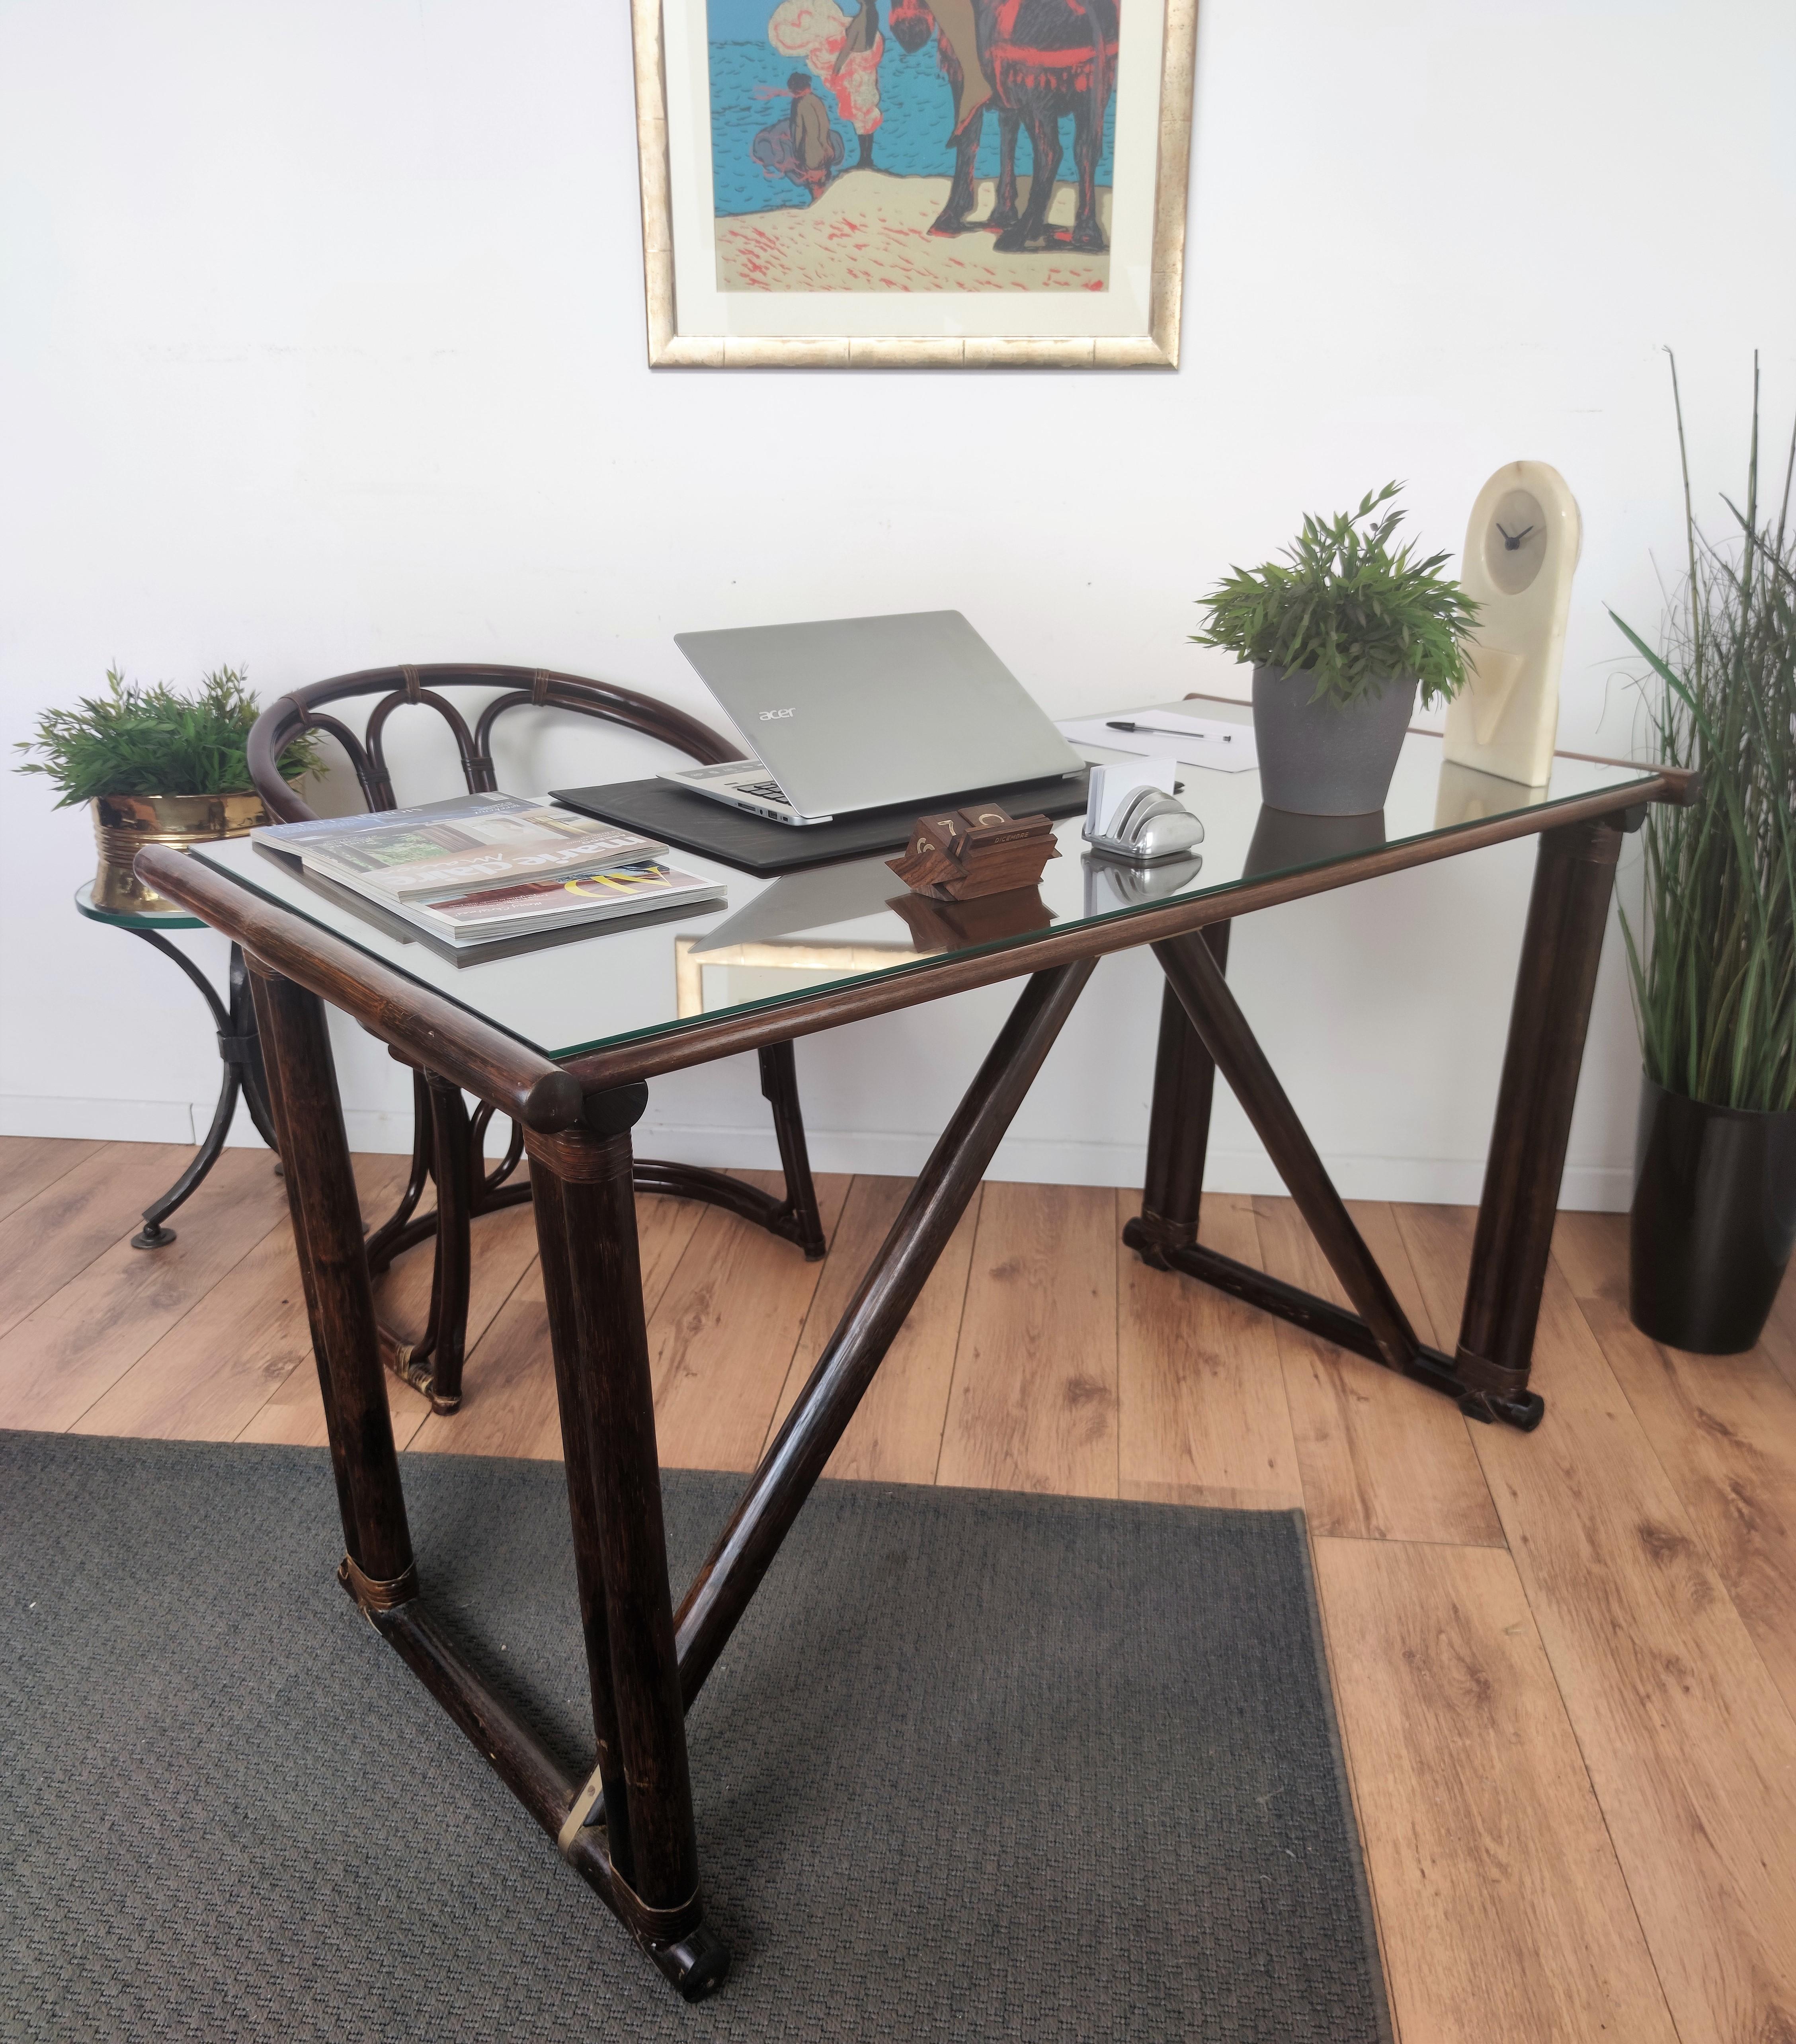 italien 1950s Italian Mid-Century Modern Faux Bamboo Wooden Desk Writing Table and Chair (Bureau et chaise en bois) en vente